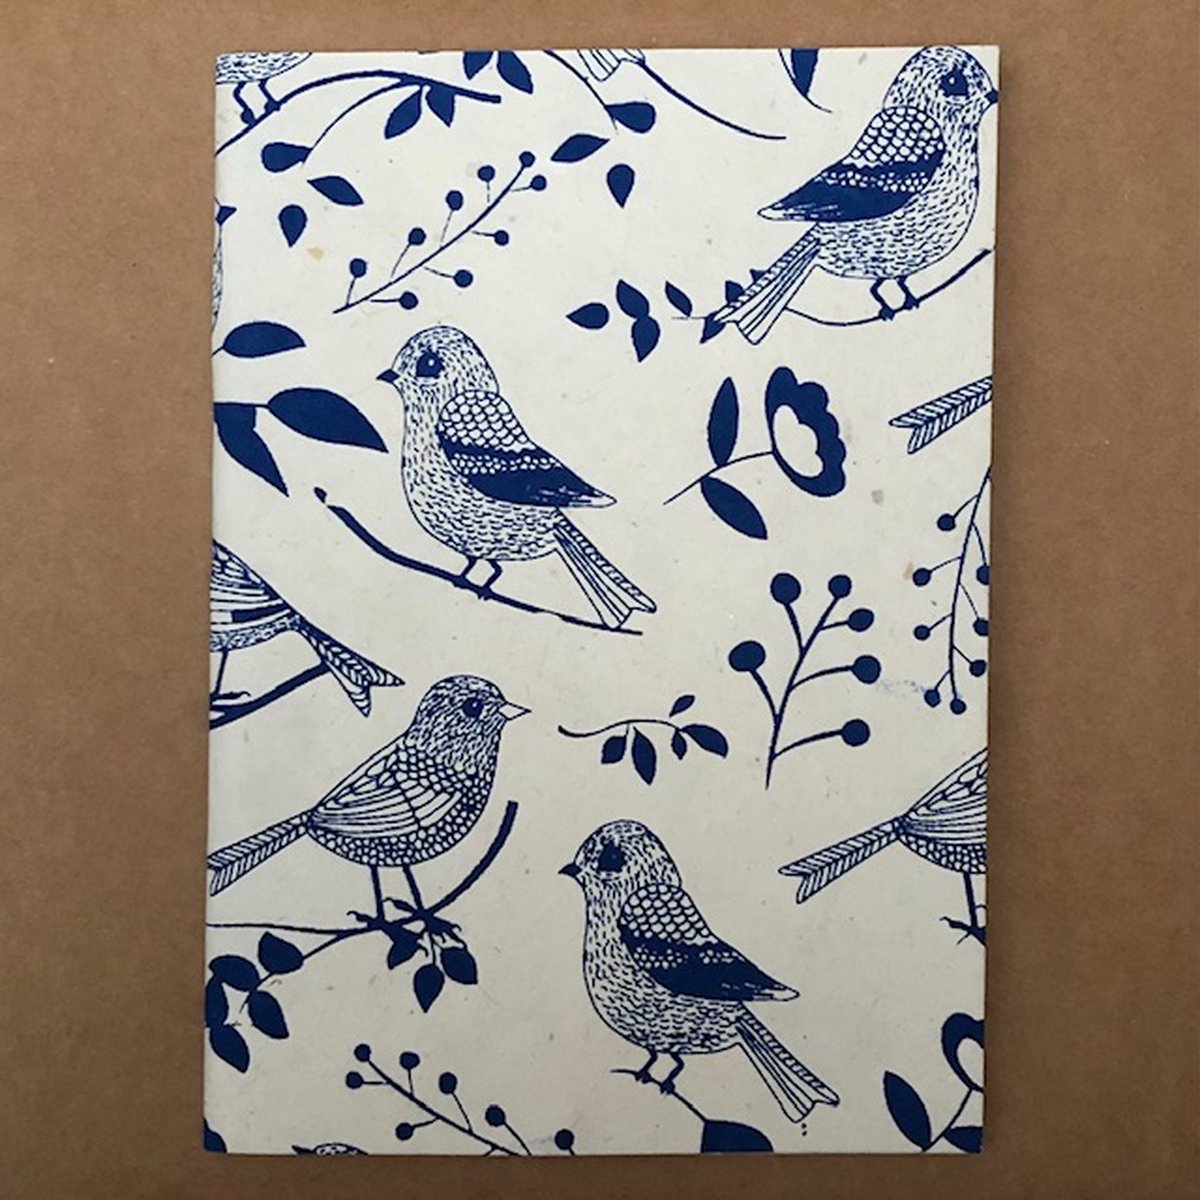 Luna-Leena duurzaam notitieboek A5 - vogel print - Hollands blauw - soft kaft - eco vriendelijk papier - handgemaakt in Nepal - notebook - souvenirs - Holland - Dutch birds